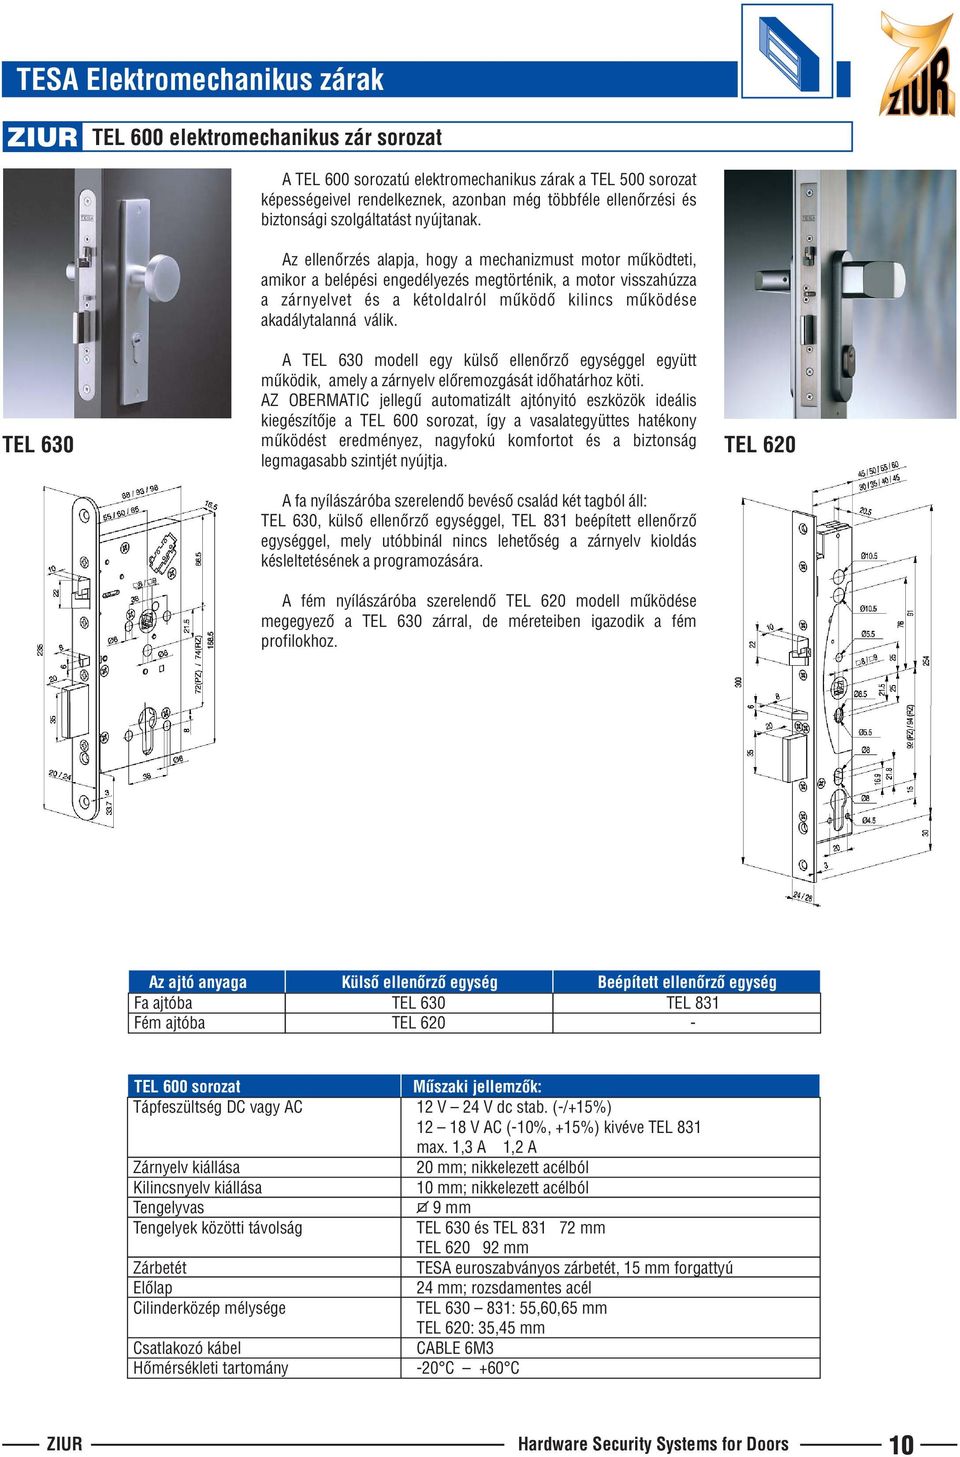 TESA elektromechanikus rendszerek - PDF Free Download